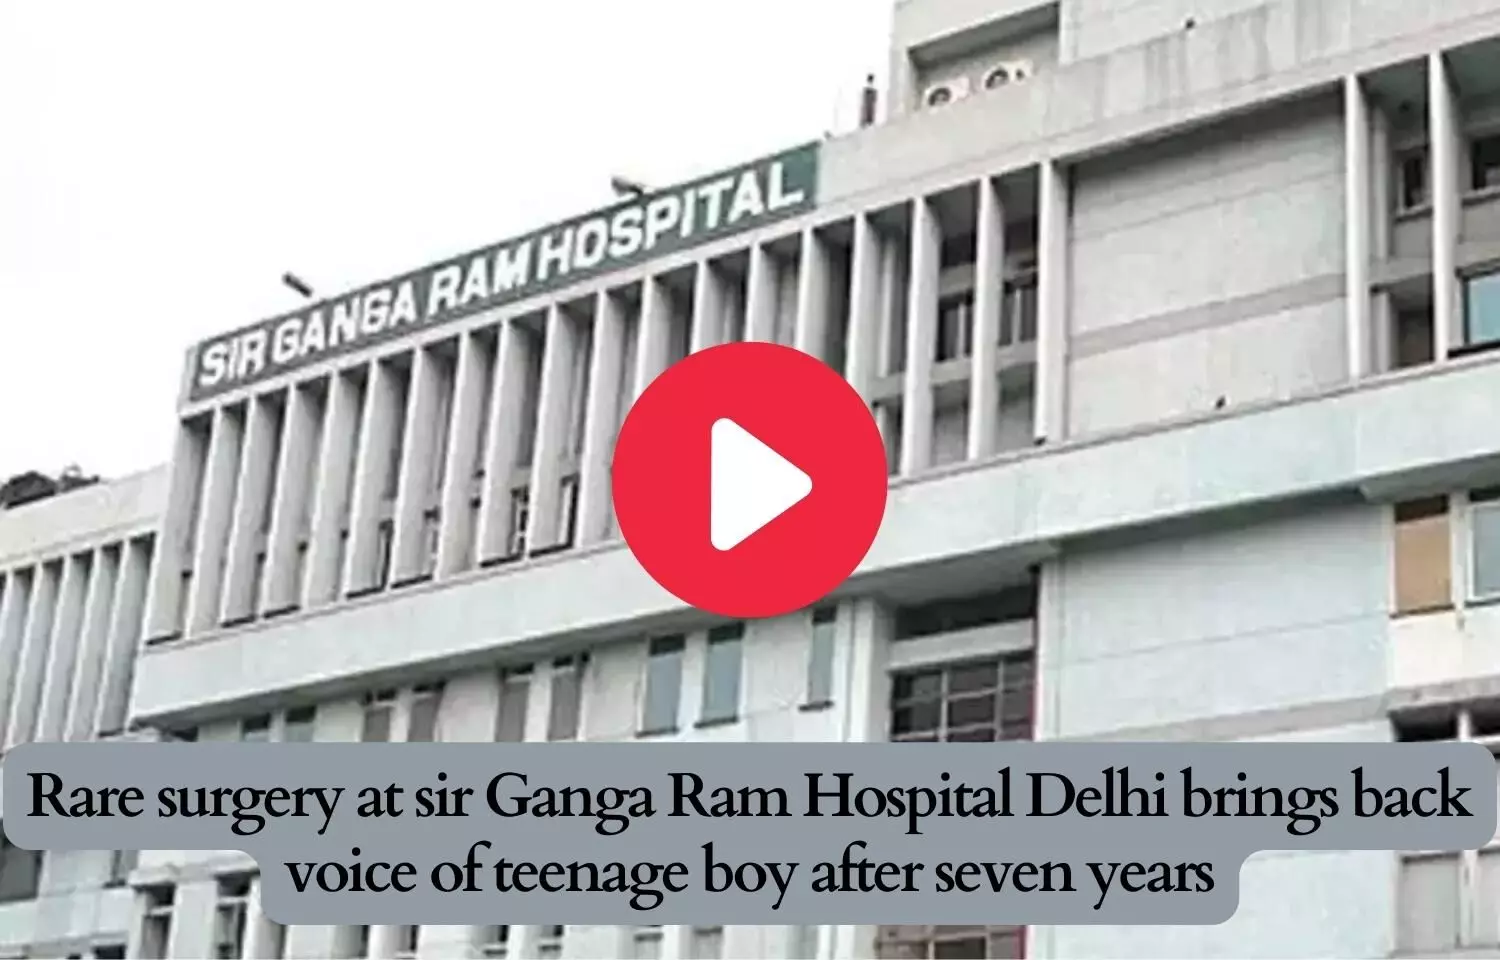 Rare surgery at Sir Ganga Ram Hospital Delhi brings back voice of teenage boy after 7 years